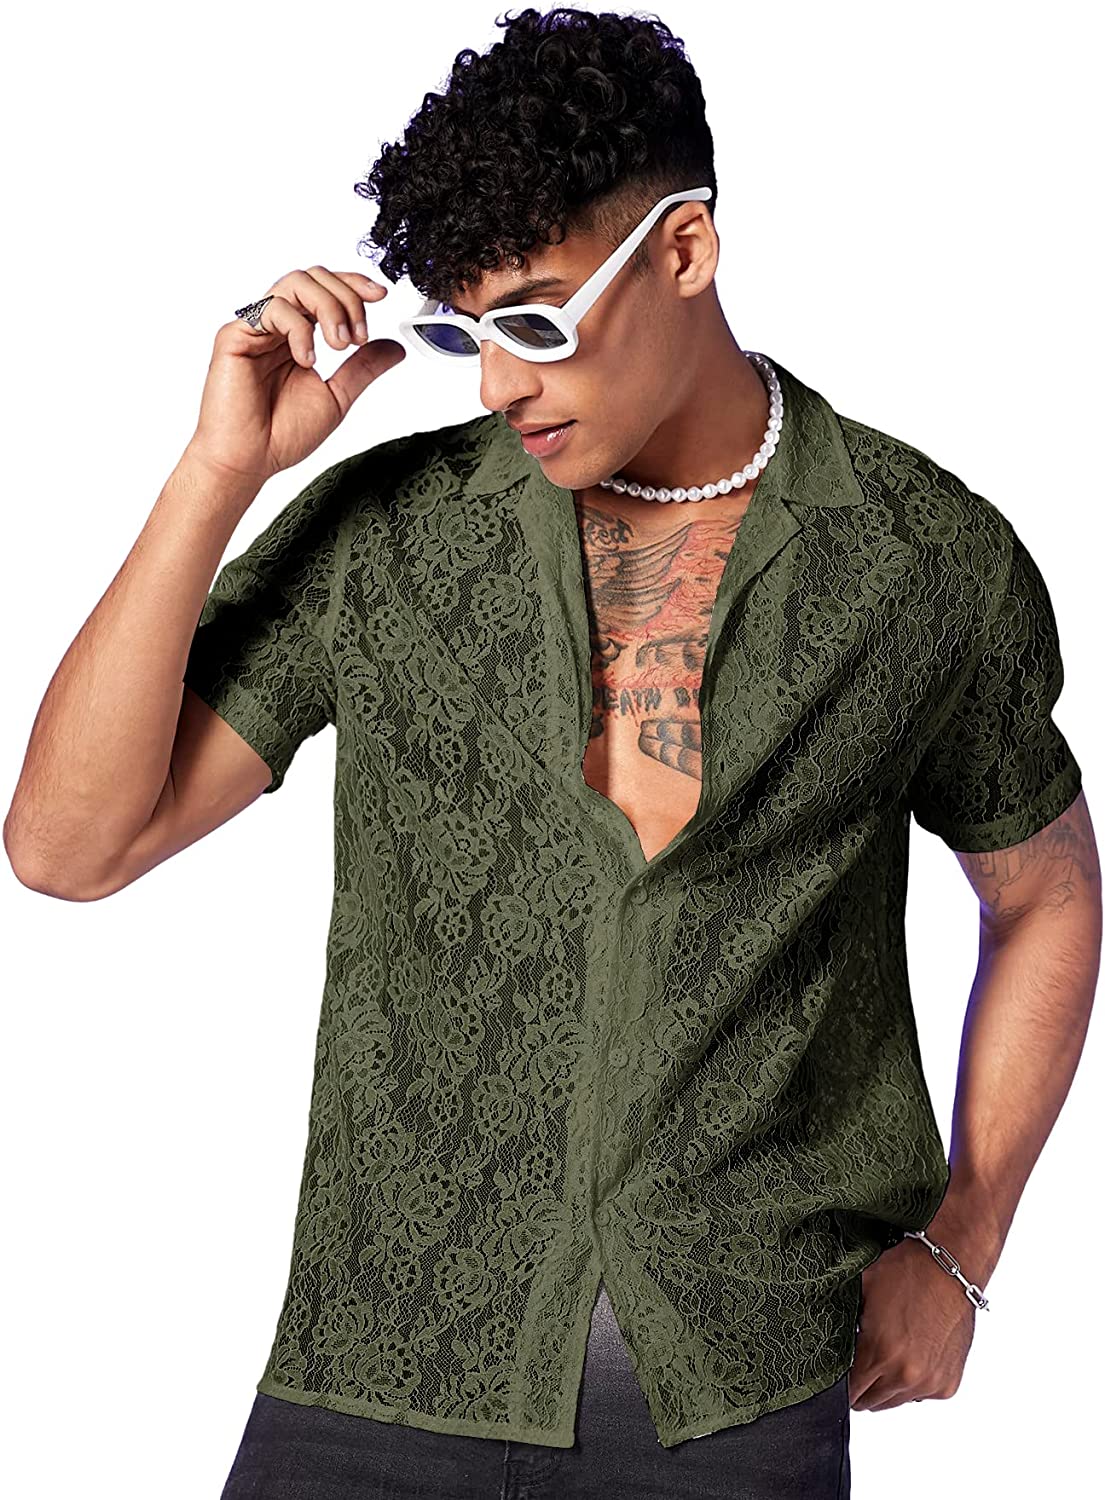 WDIRARA Men's Floral Print Sheer Mesh Sleeve Top T Shirt Notched V Neck  Club Tee Black Floral XS